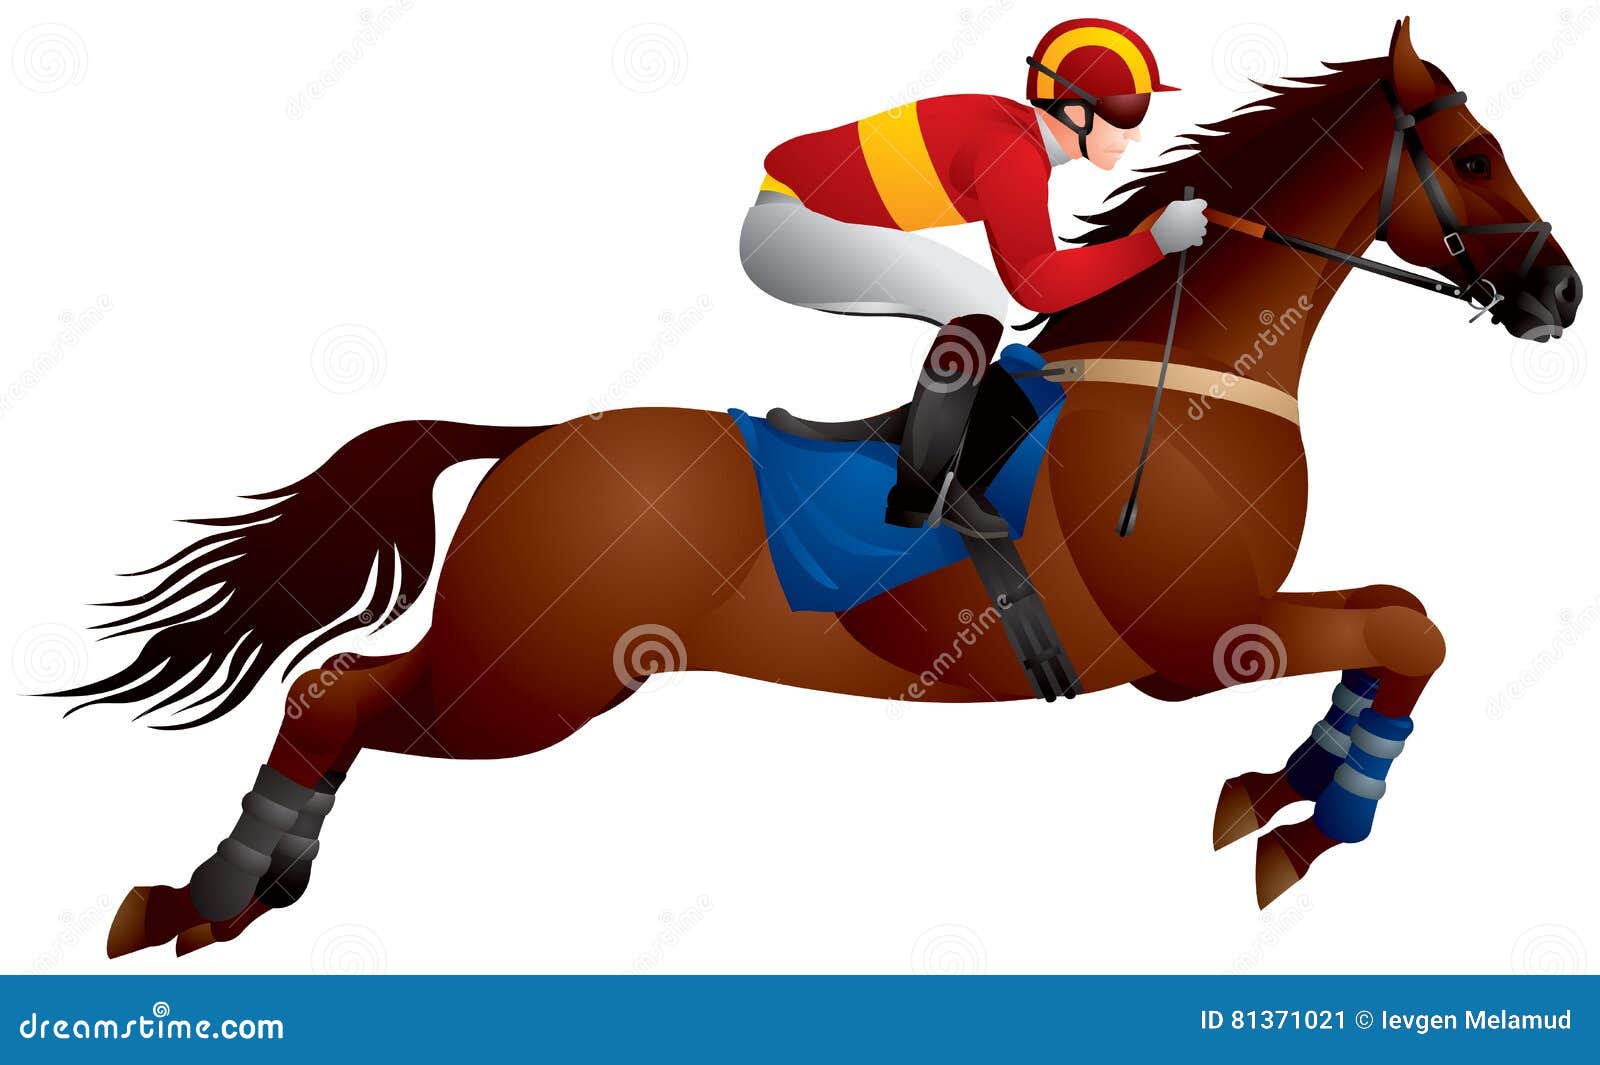 horse race derby jump